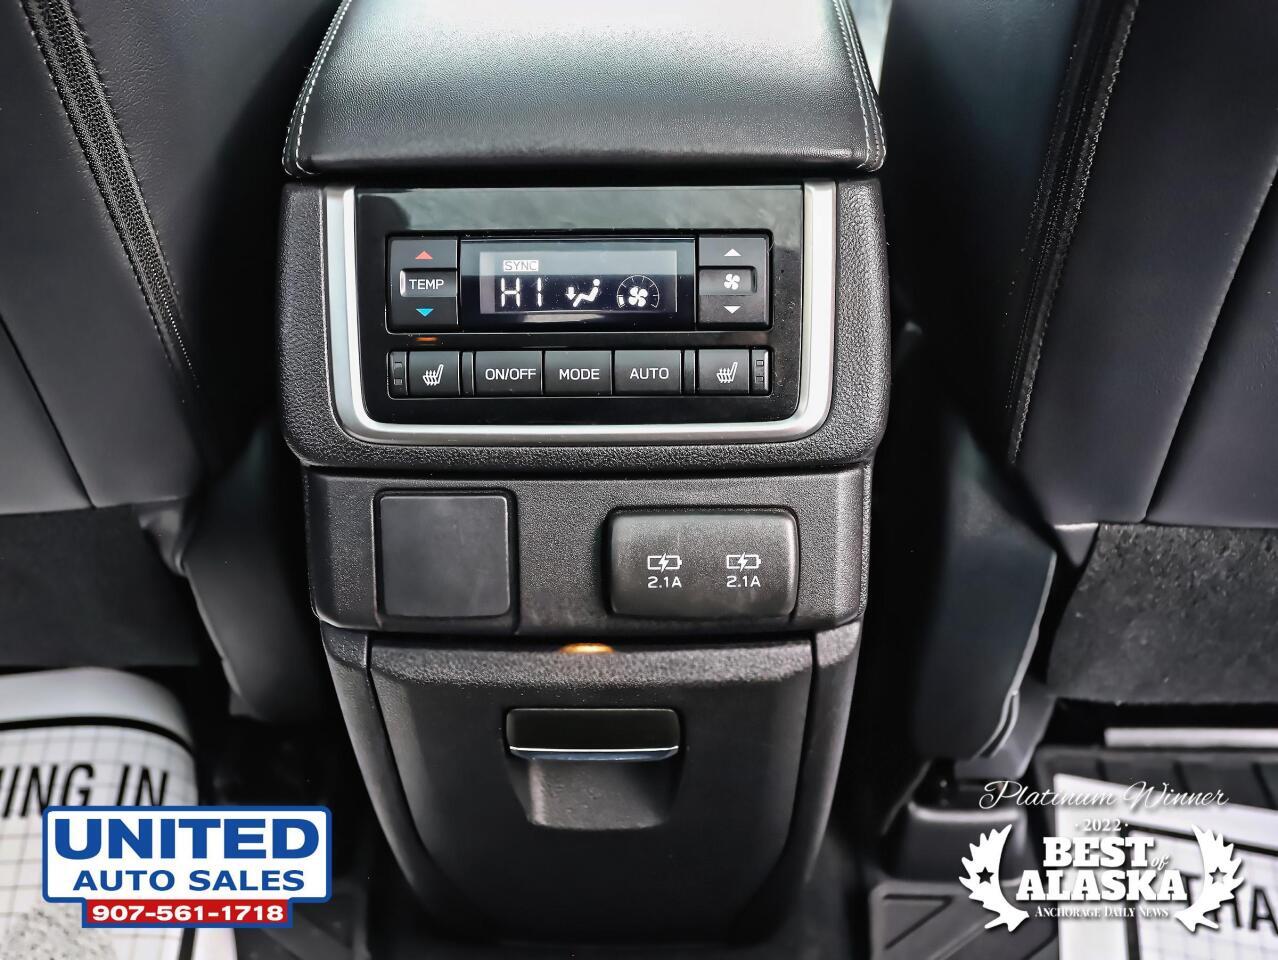 2019 Subaru Ascent Limited 7 Passenger AWD 4dr SUV 75